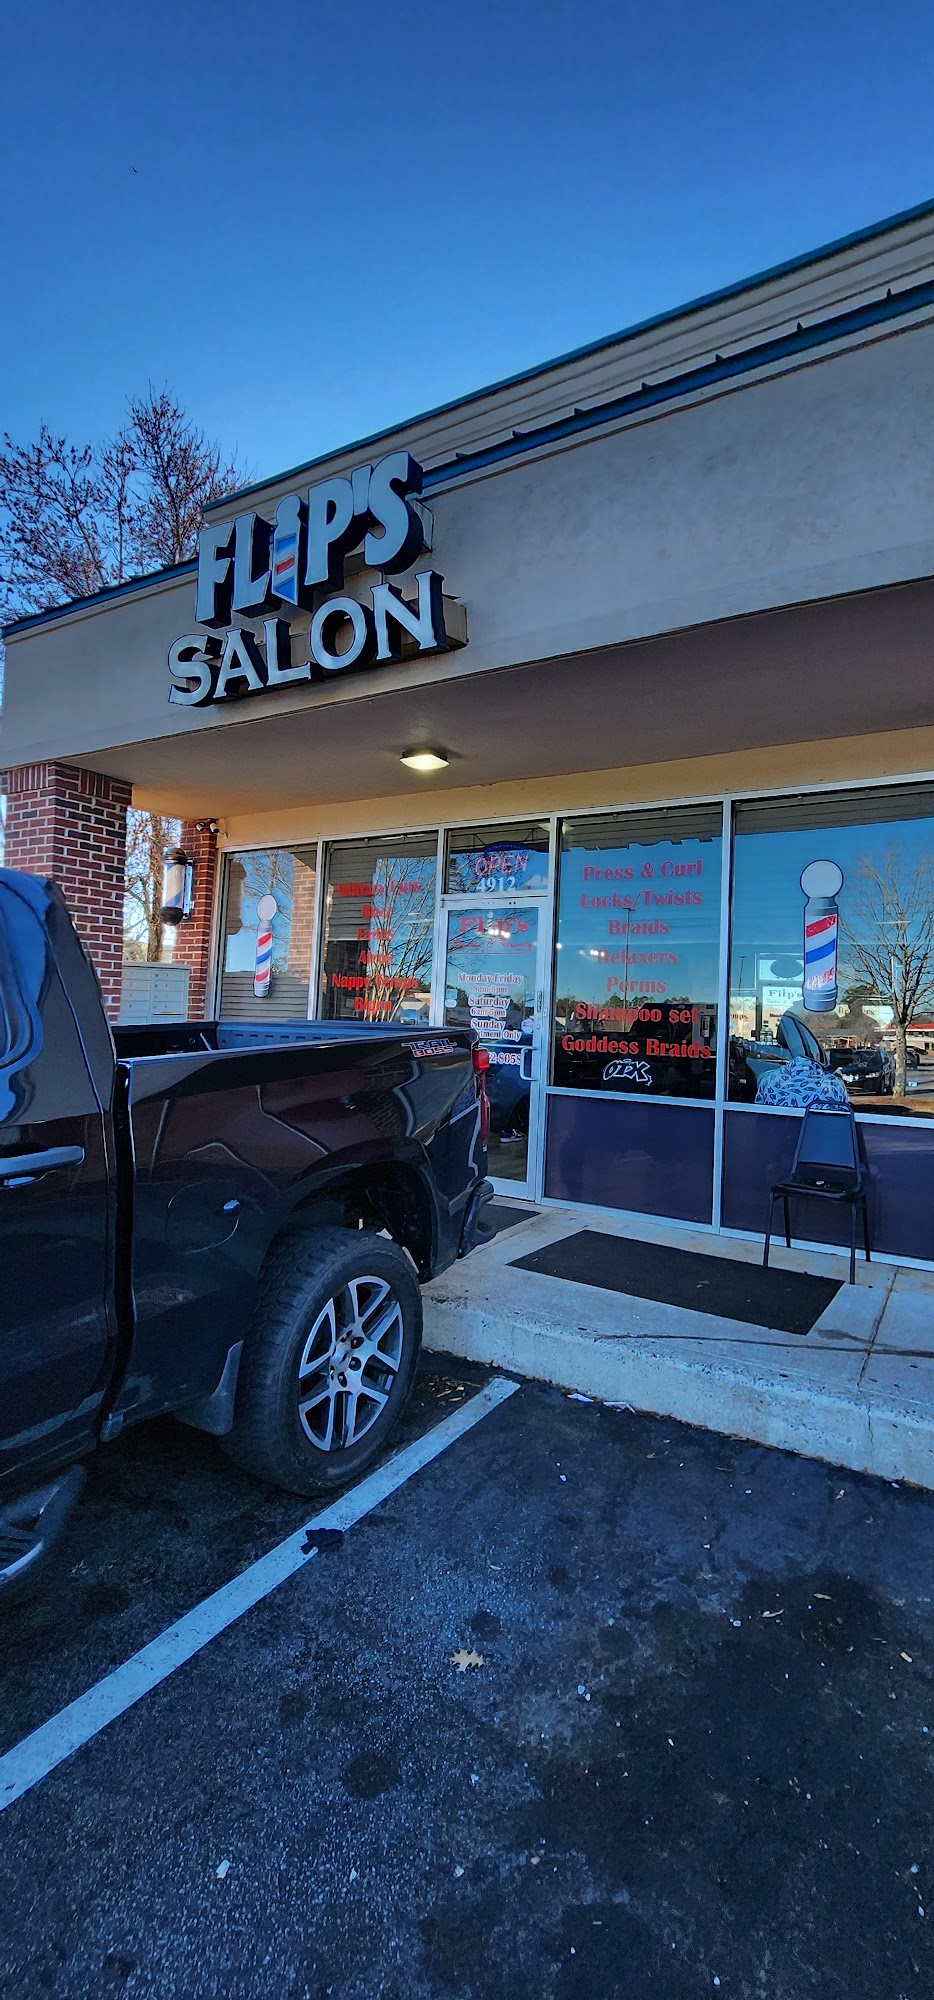 Flip's Barber and Beauty Salon